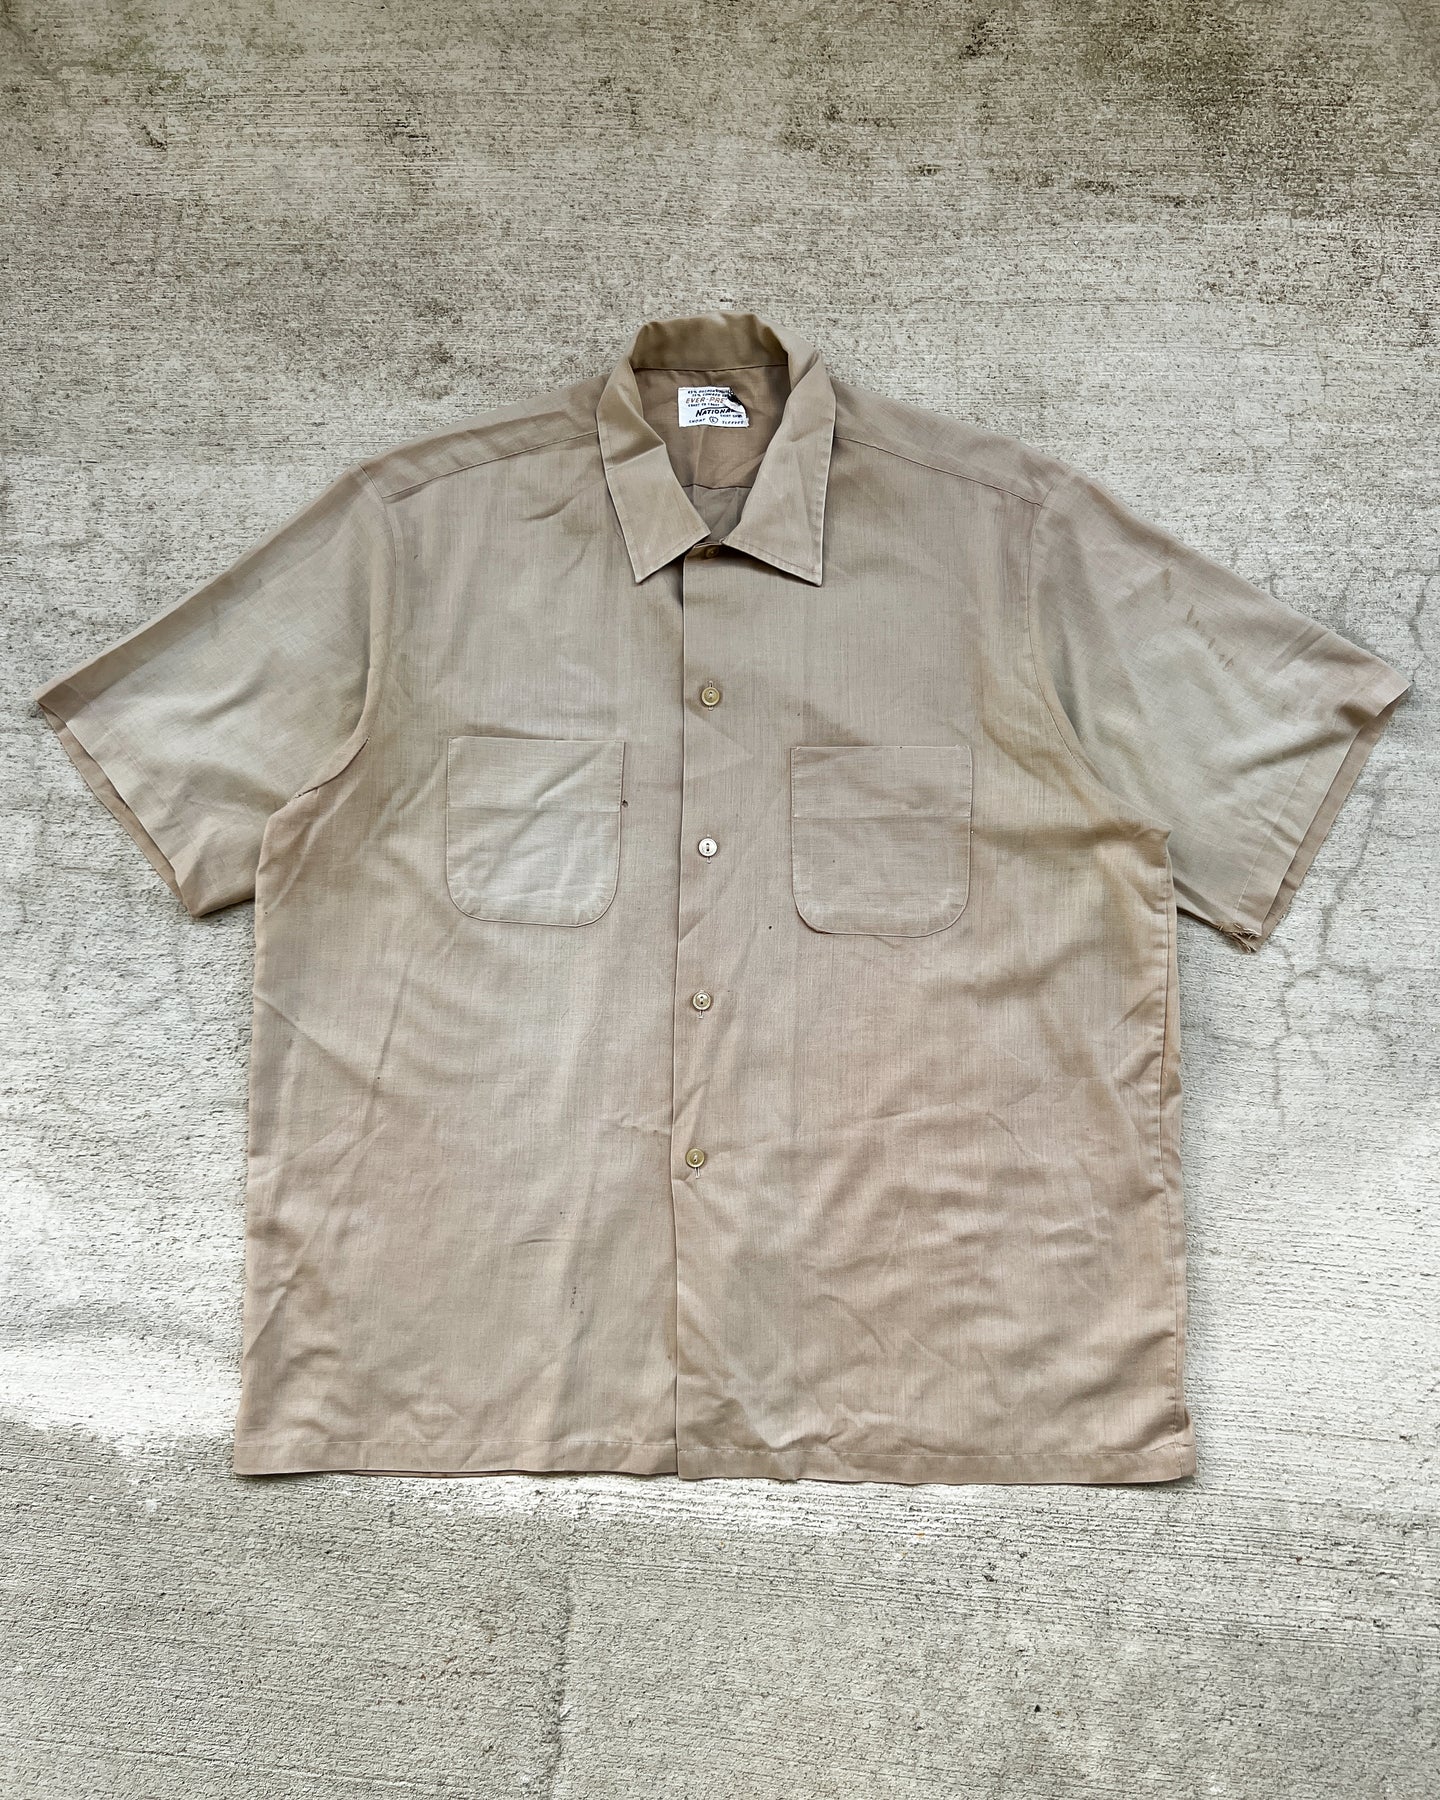 1960s Tan Camp Collar Button Down Shirt - Size X-Large